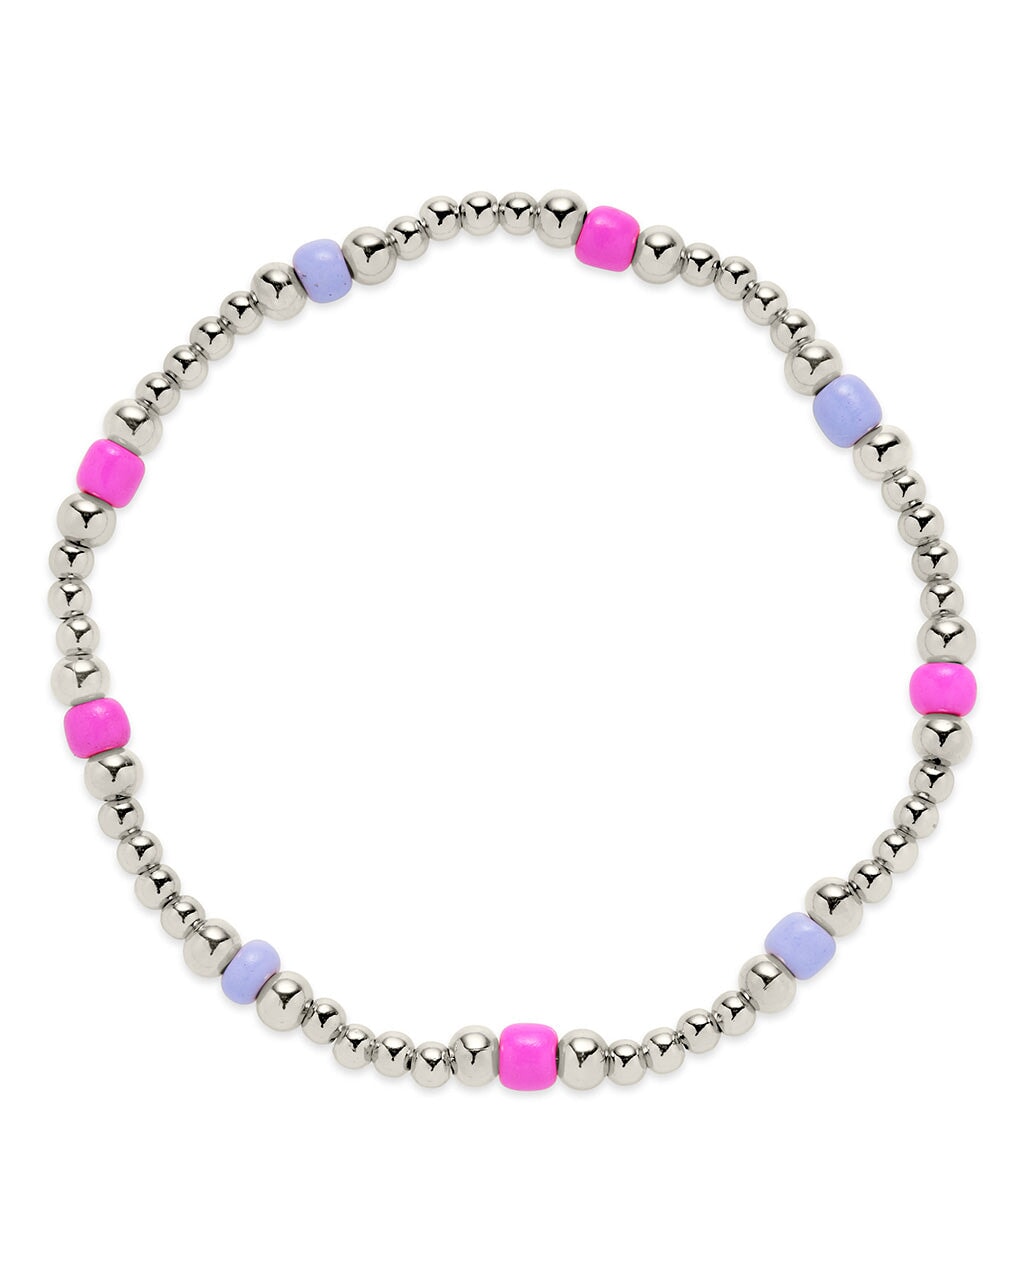 Sterling Silver Bracelets, Buy Pink Bracelets Jwelery Online from Royaro!